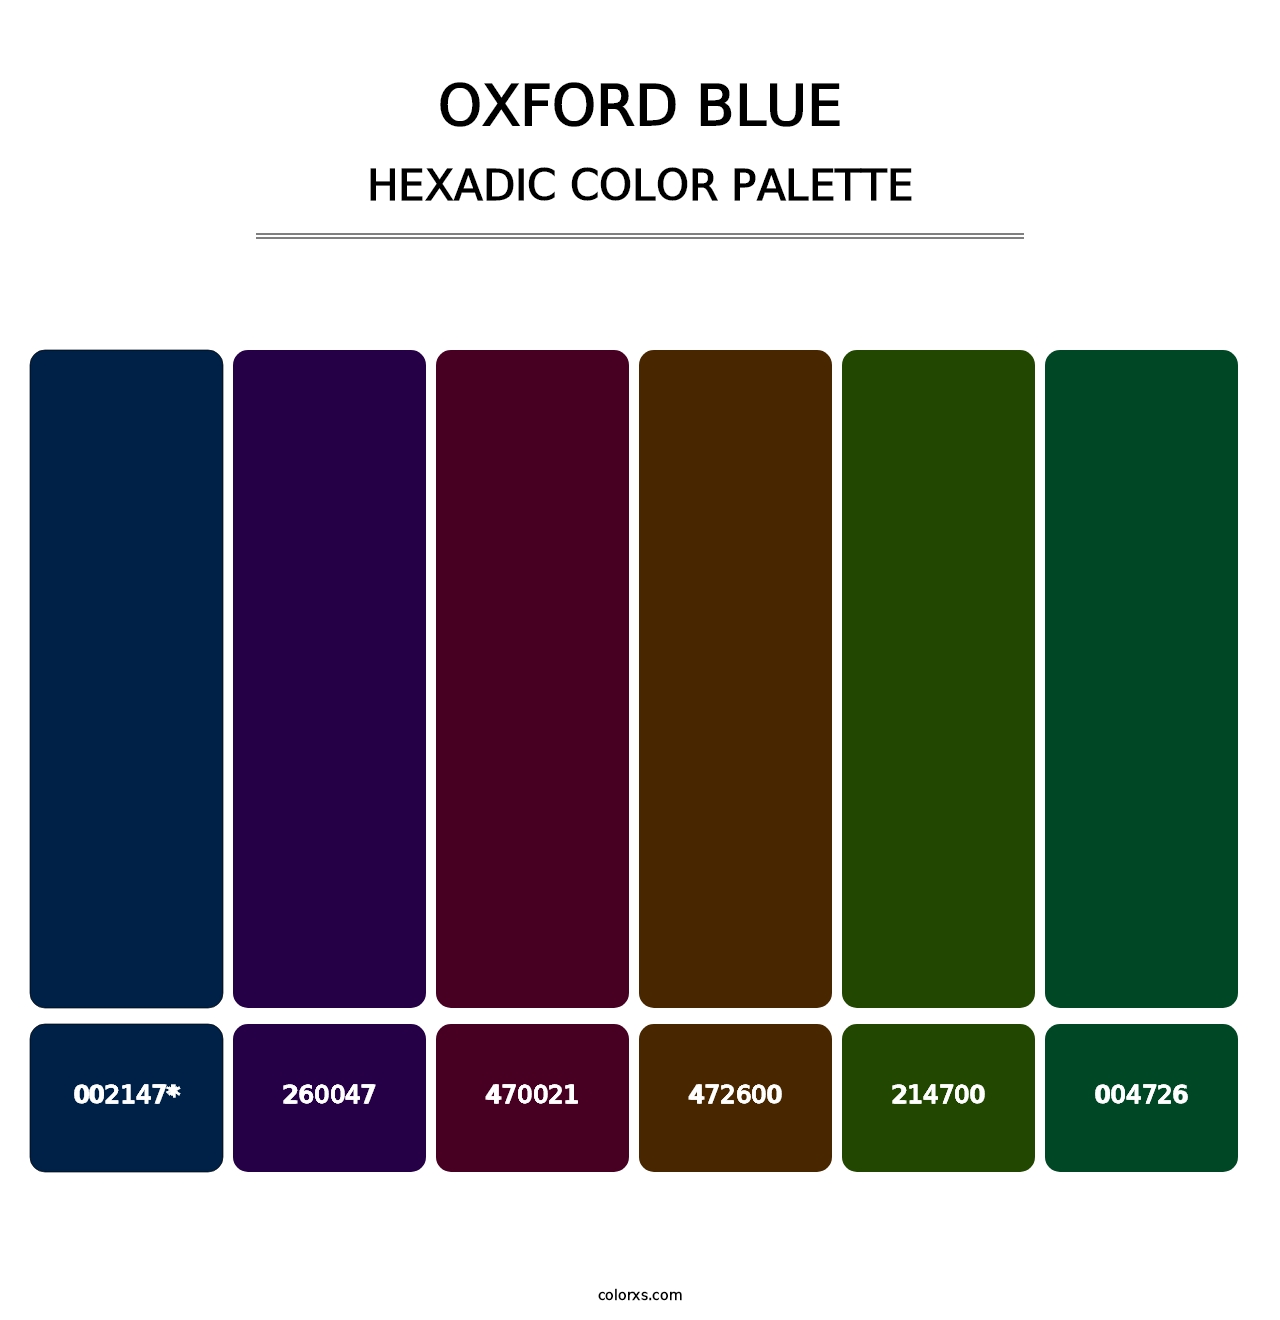 Oxford Blue - Hexadic Color Palette